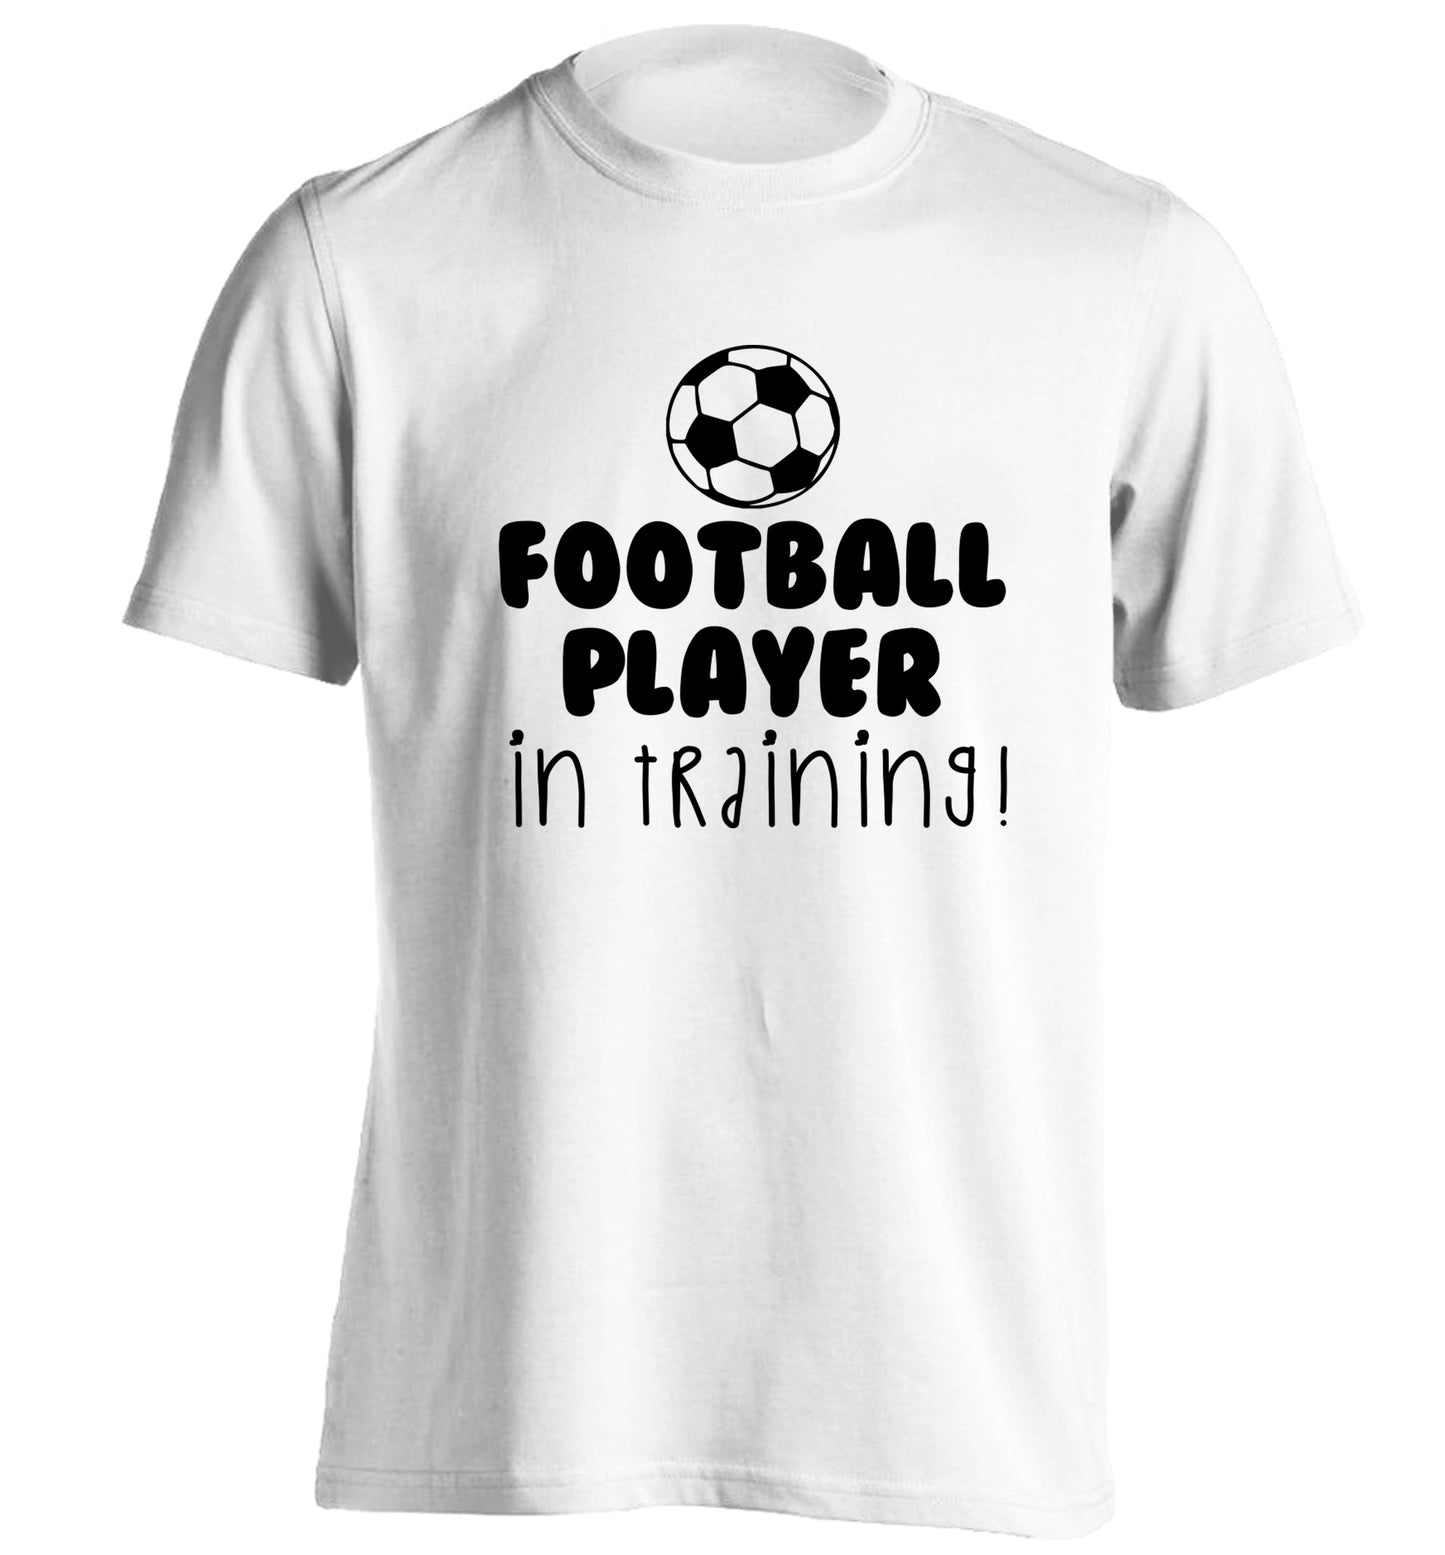 Football player in training adults unisex white Tshirt 2XL